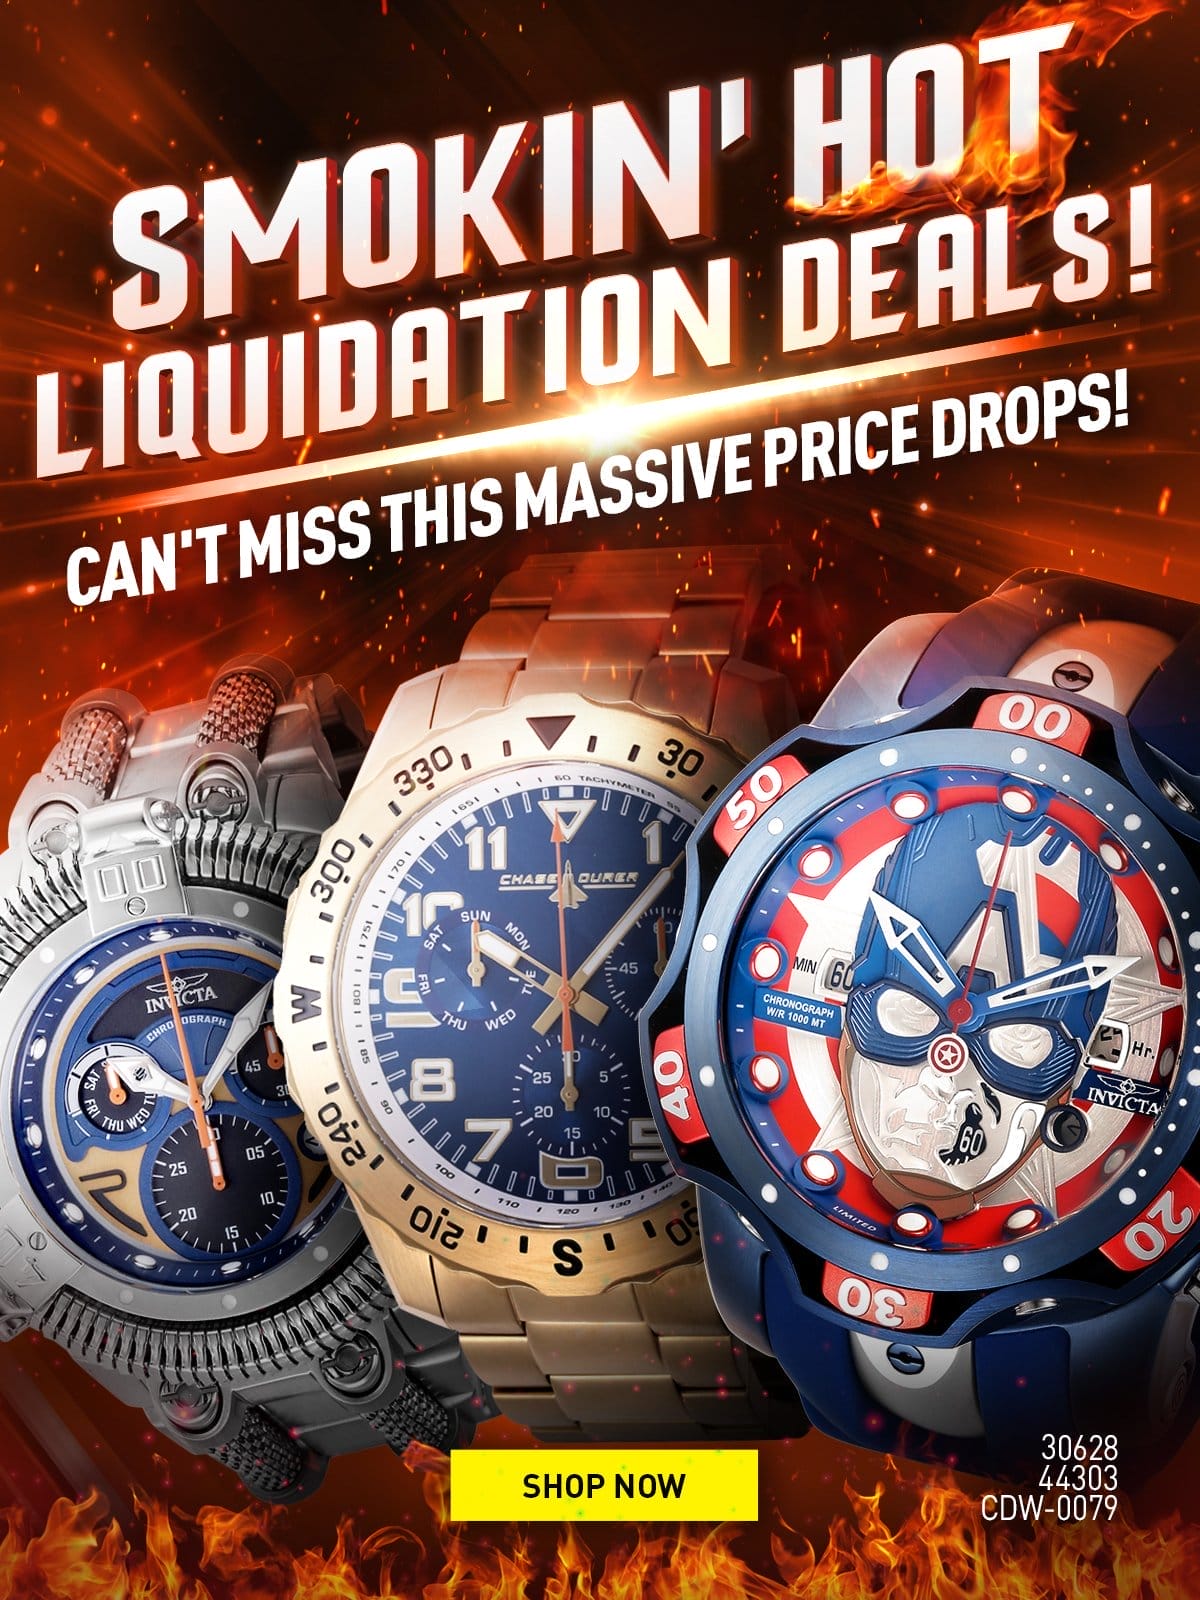 Smokin' hot liquidation deals! - Can't miss this massive price drops!